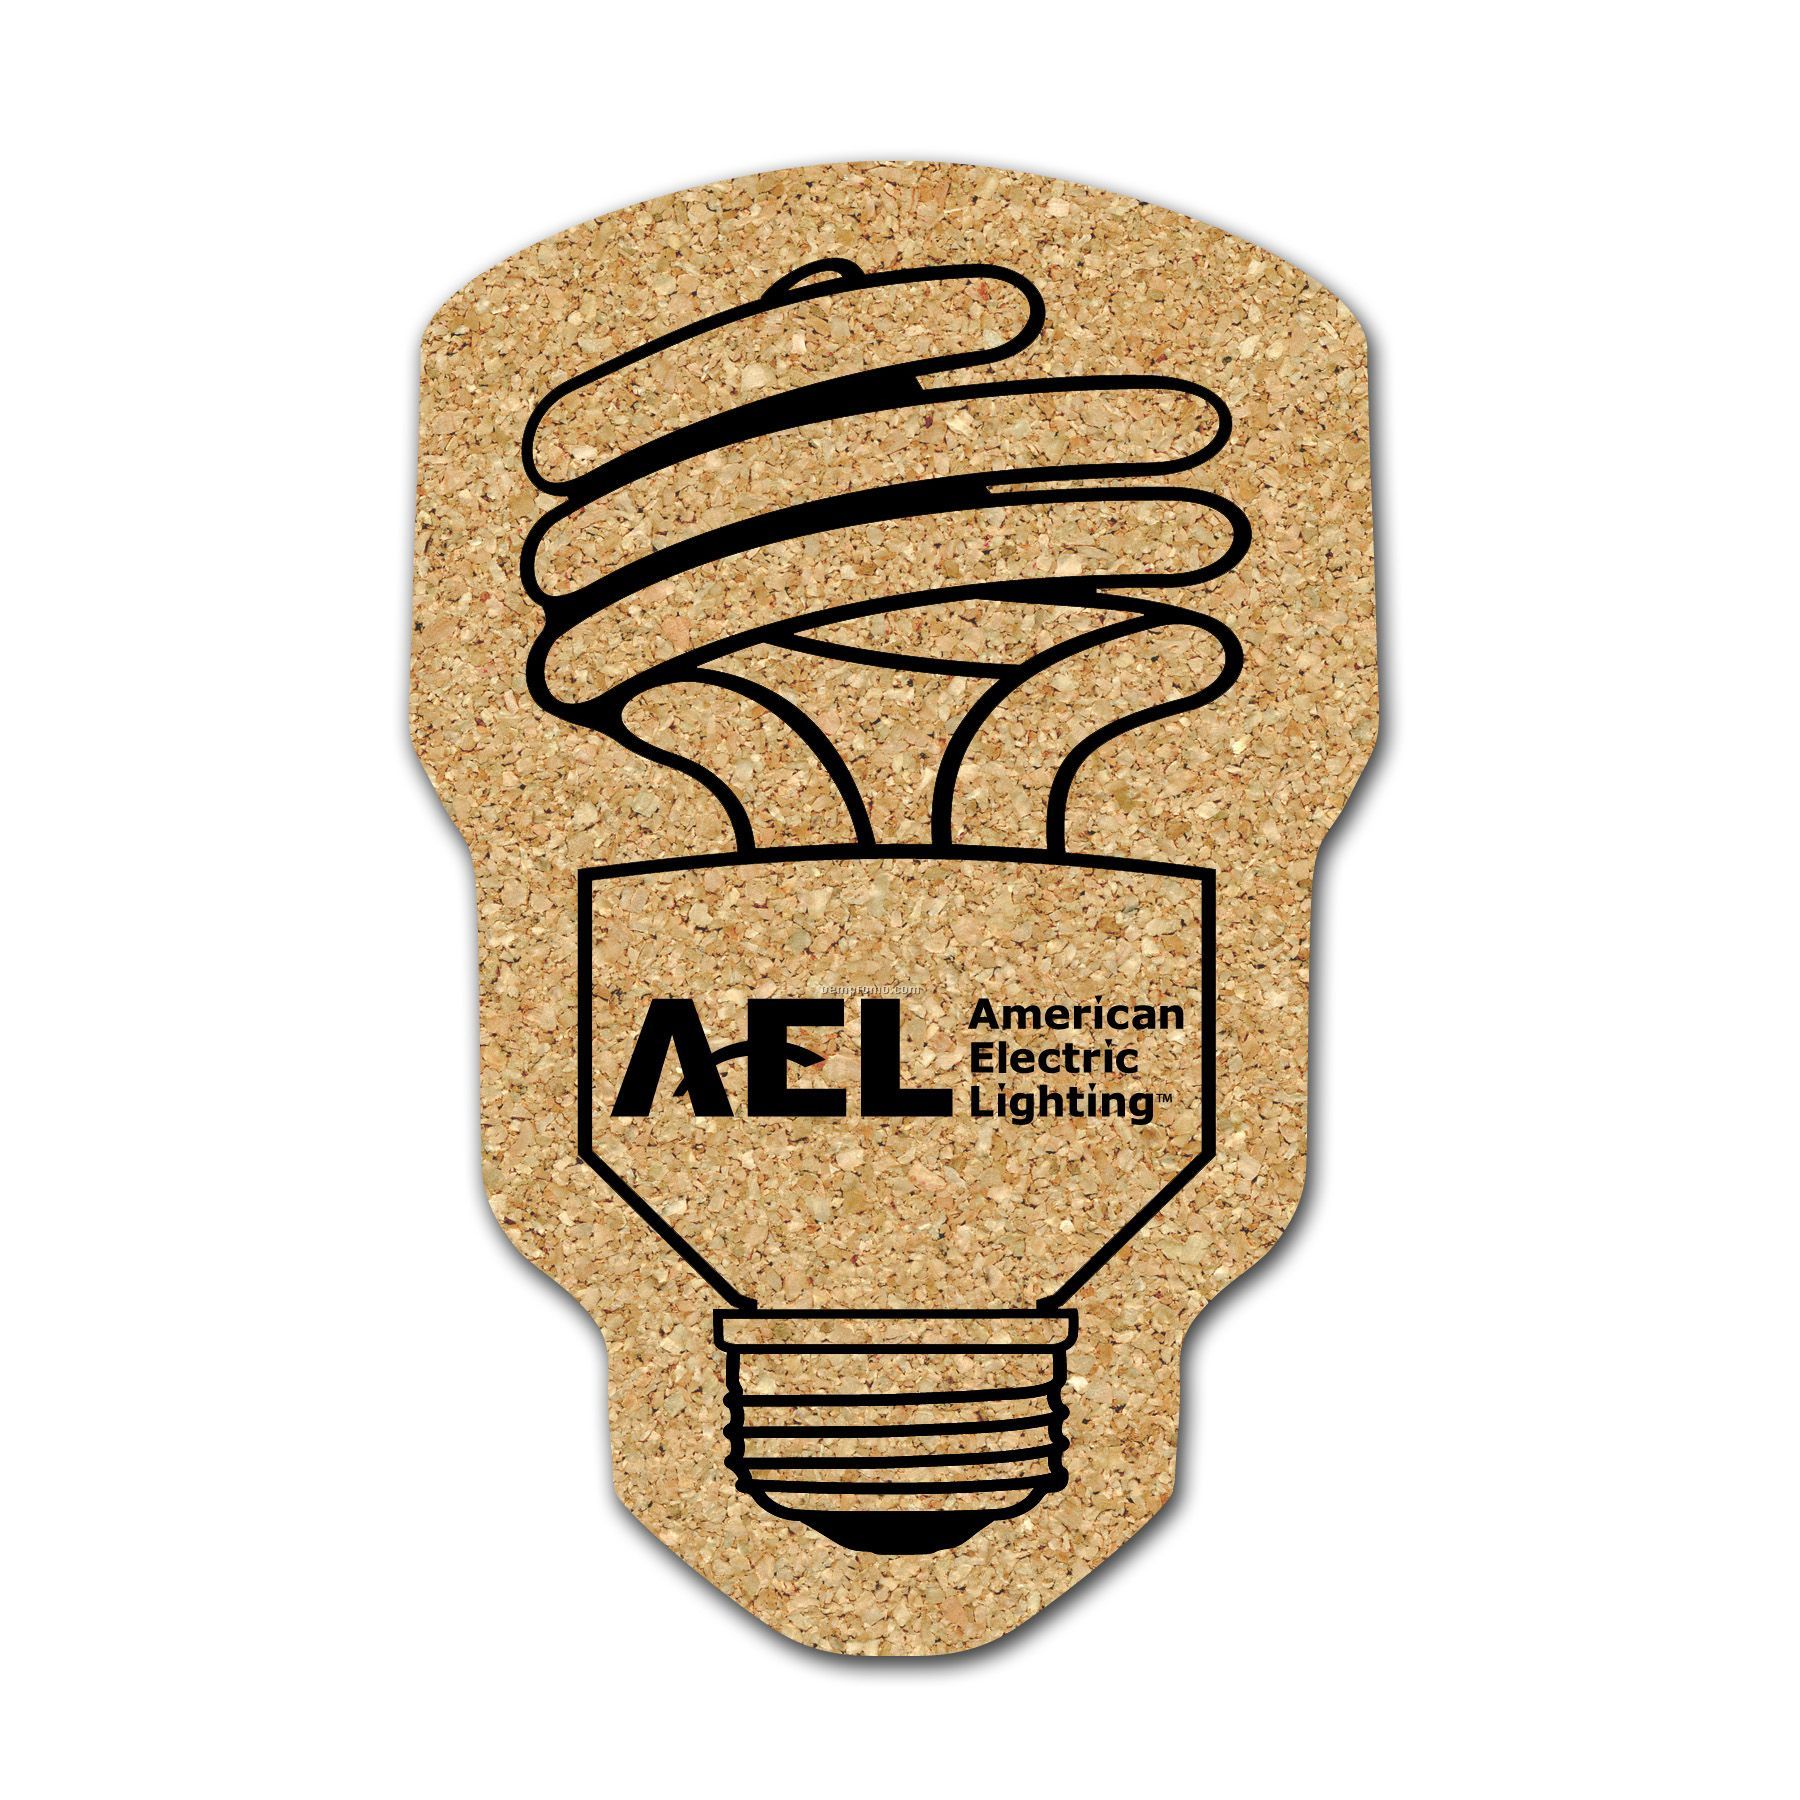 All Natural Cork Energy Efficient Light Bulb Coaster